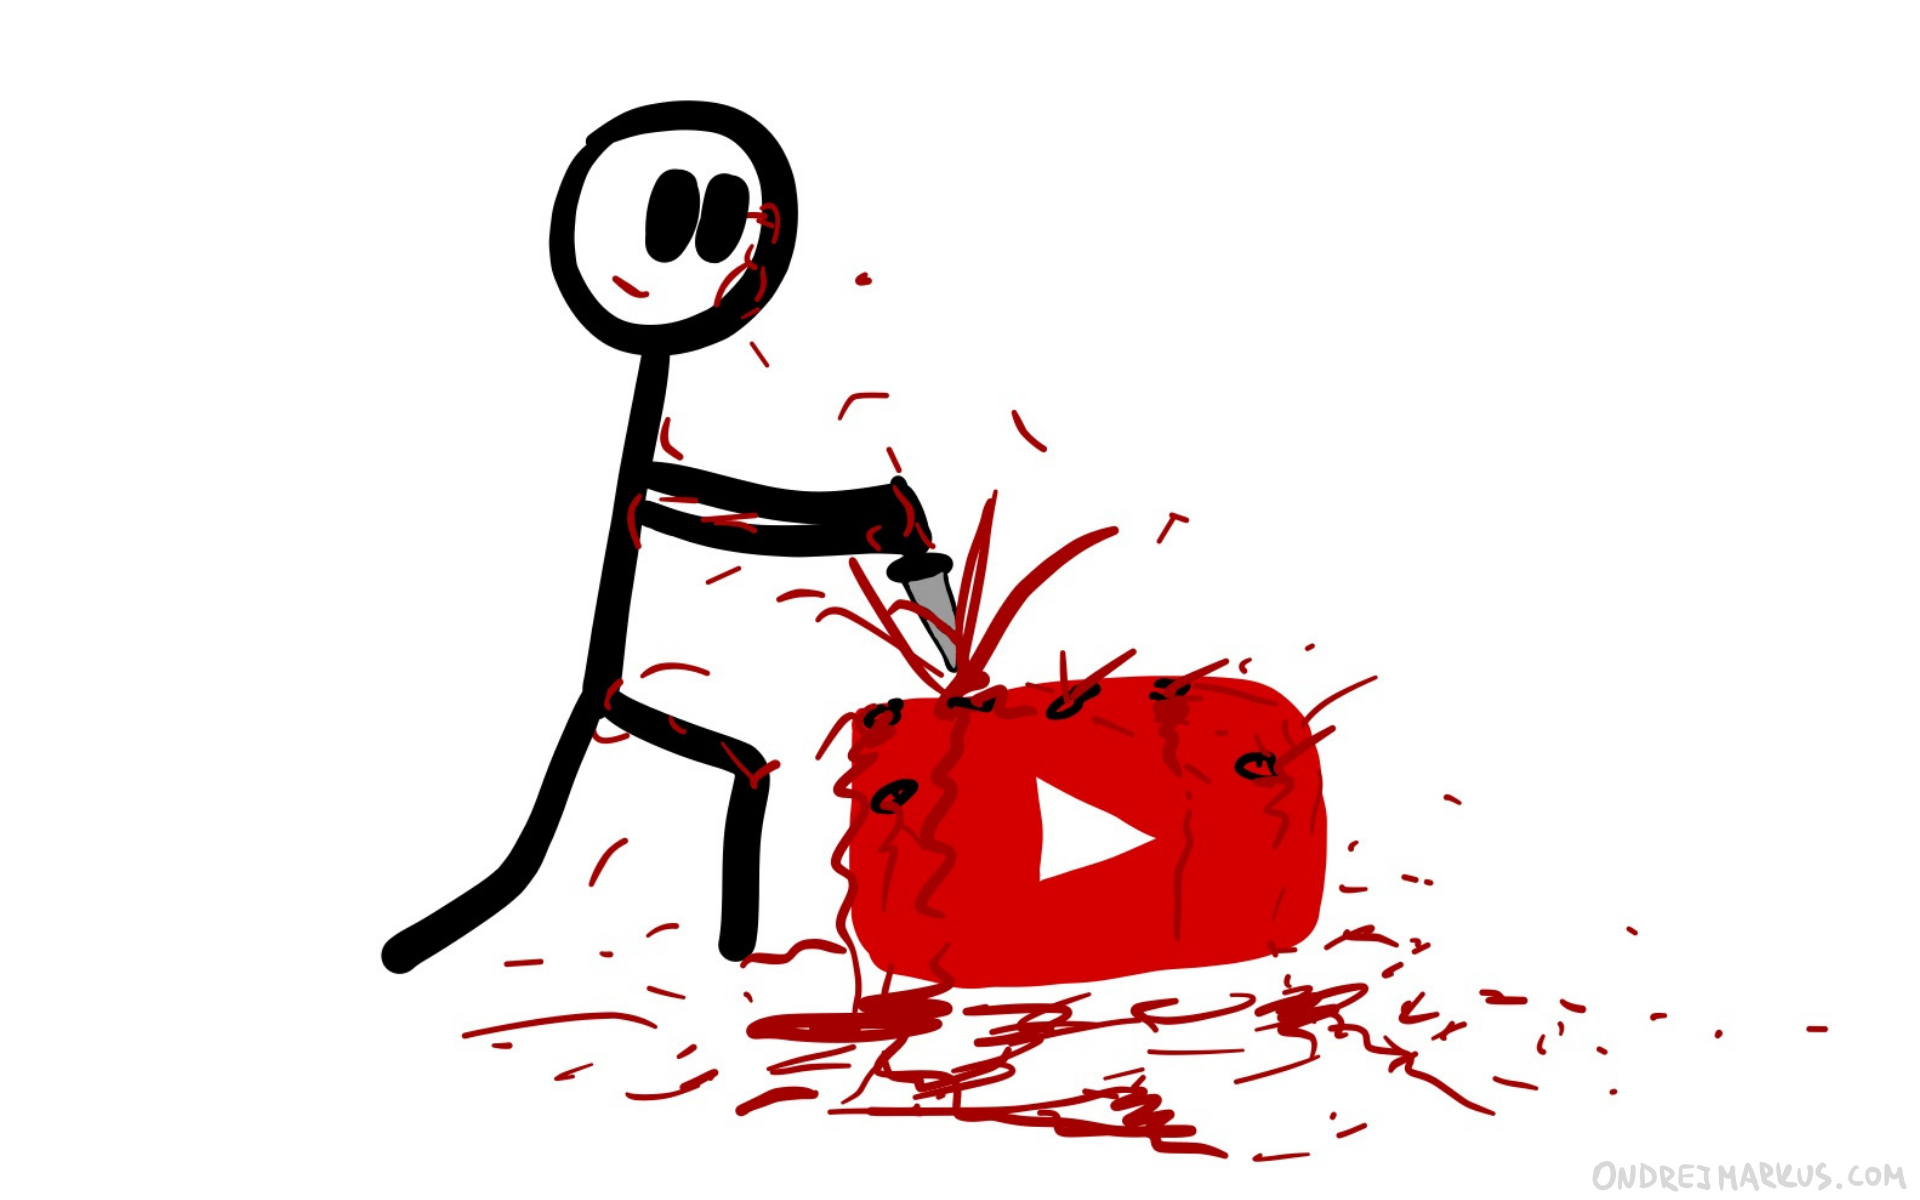 Killing my Youtube habit